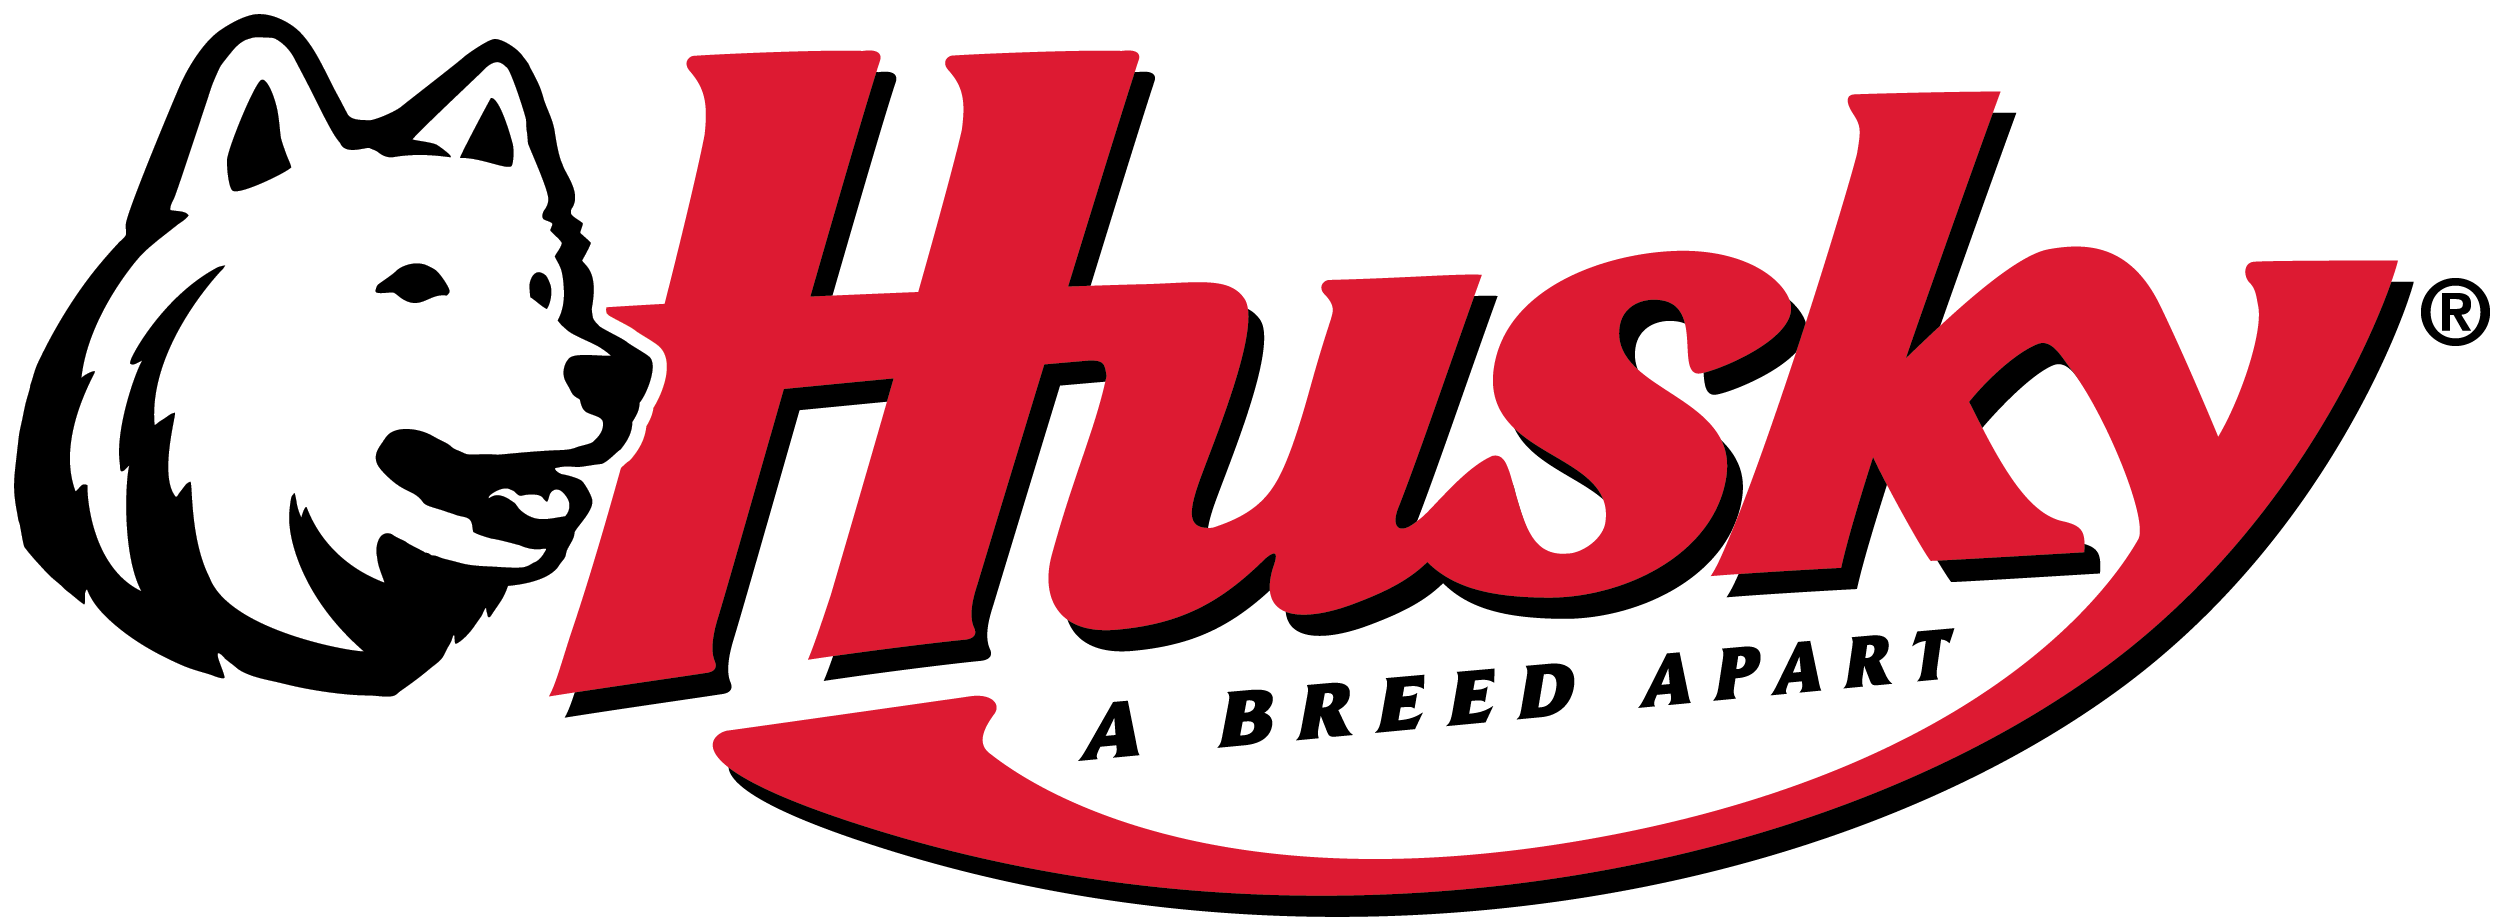 Husky logo.png